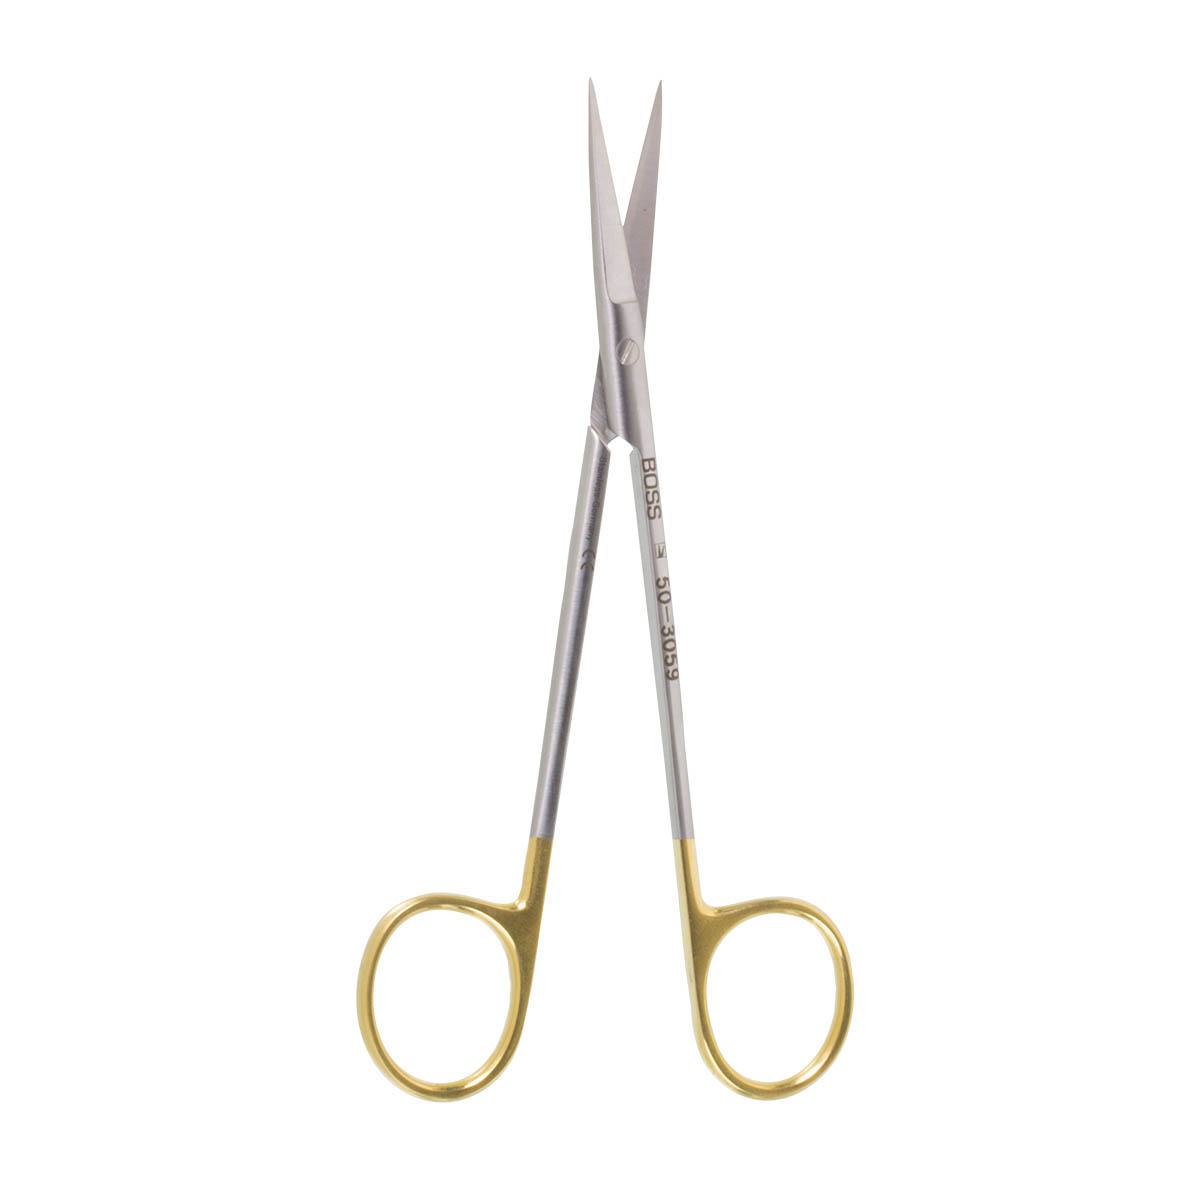 Joseph scissors, 5 1/2'',curved double-edge blades, sharp tips, ring handle